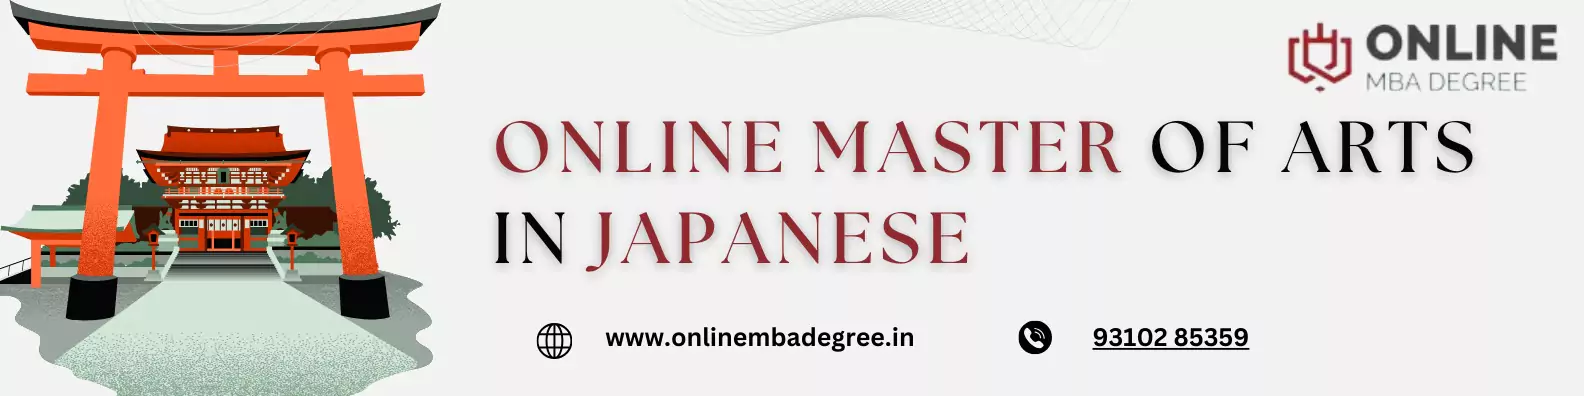 Online MBA Degree